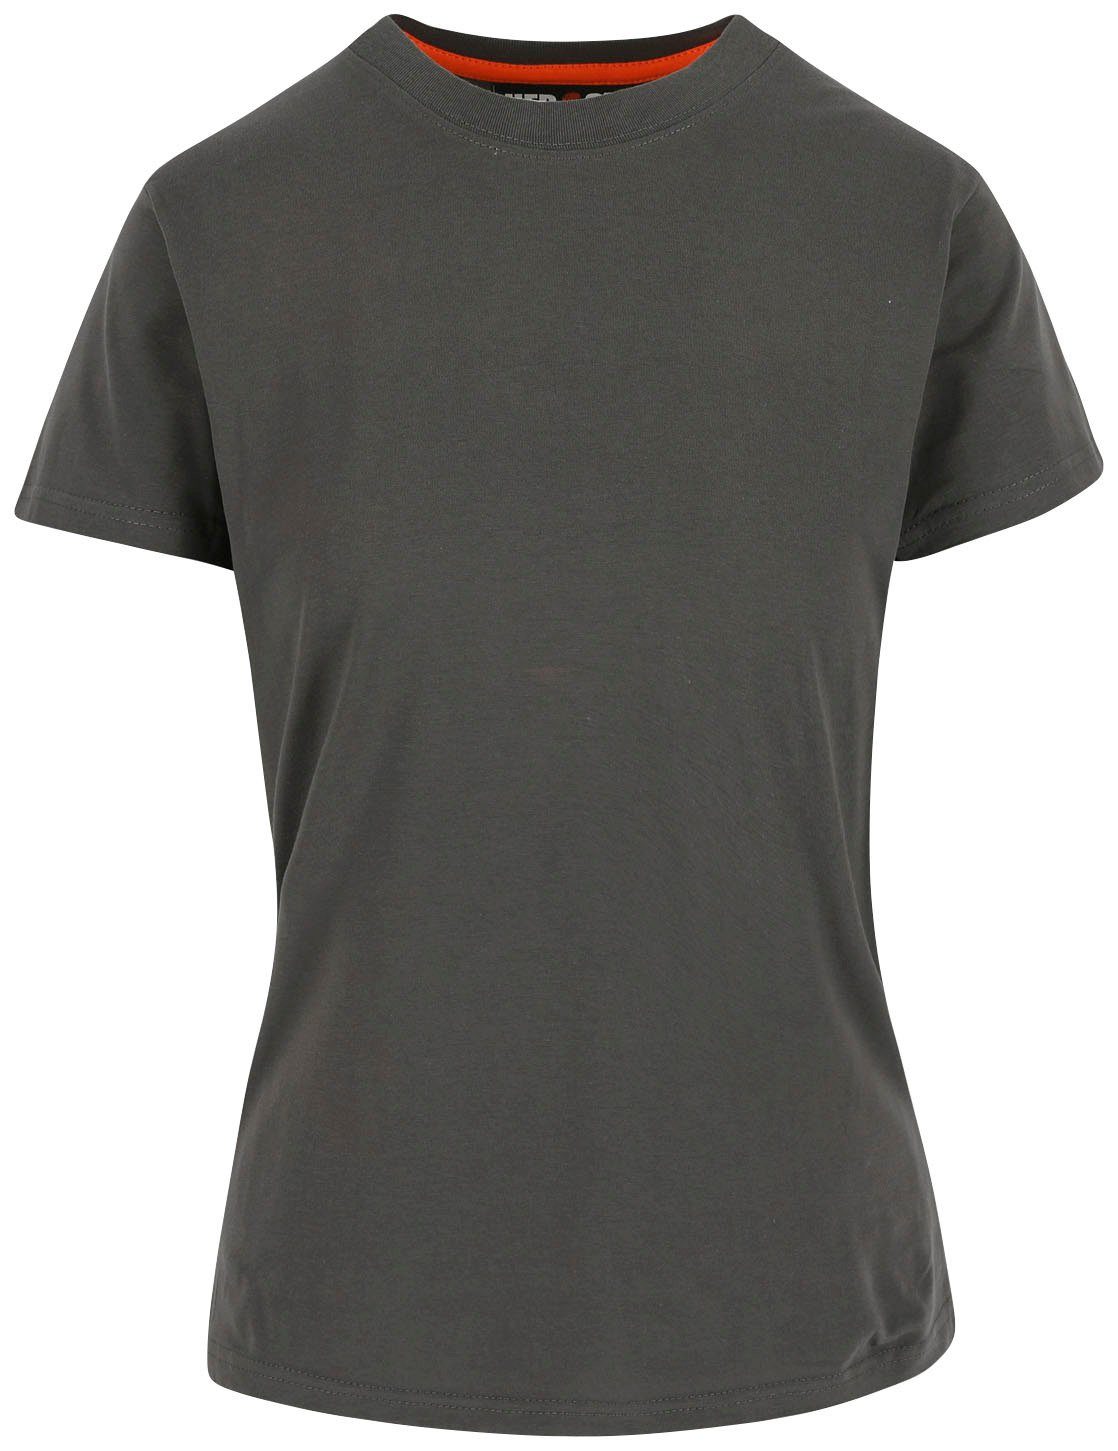 Herock T-Shirt Tragegefühl Epona Kurzärmlig Schlaufe, hintere angenehmes Figurbetont, T-Shirt grau Damen 1